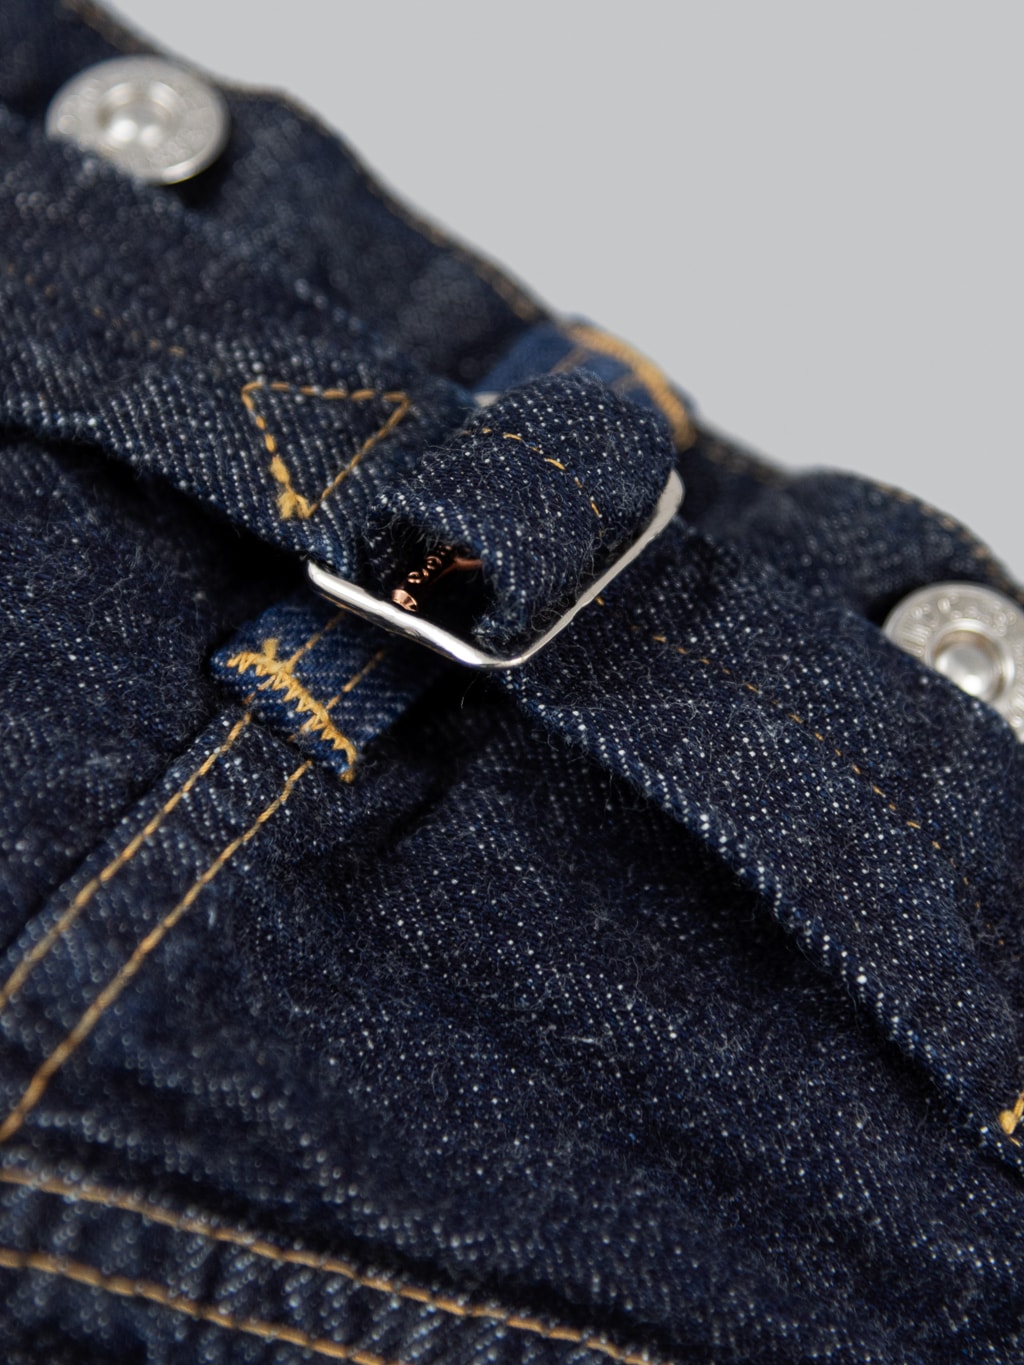 TCB 20s indigo Jeans one wash vintage style cinch back detail